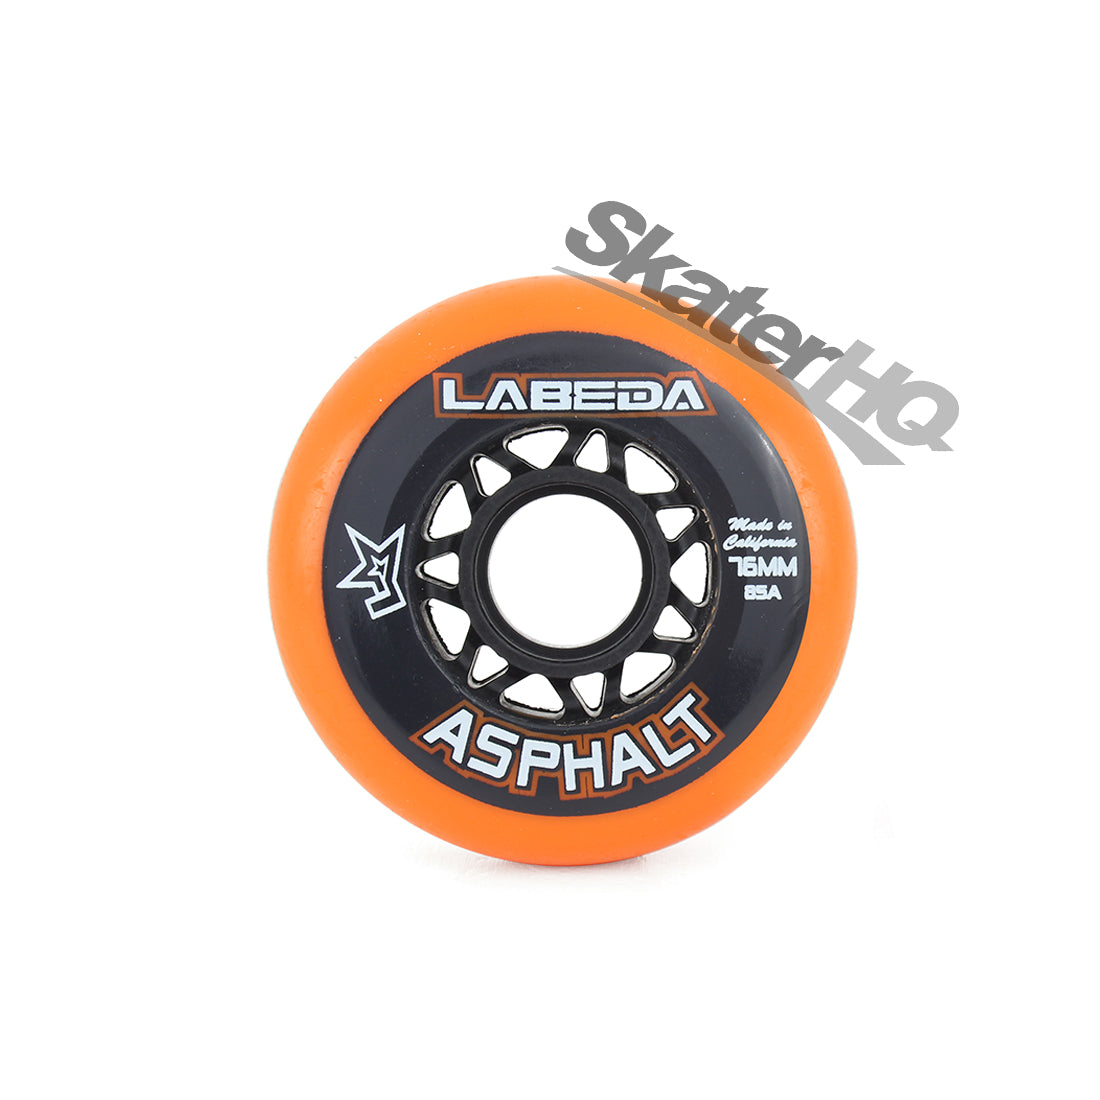 Labeda Asphalt 76mm/85A - Single Inline Rec Wheels